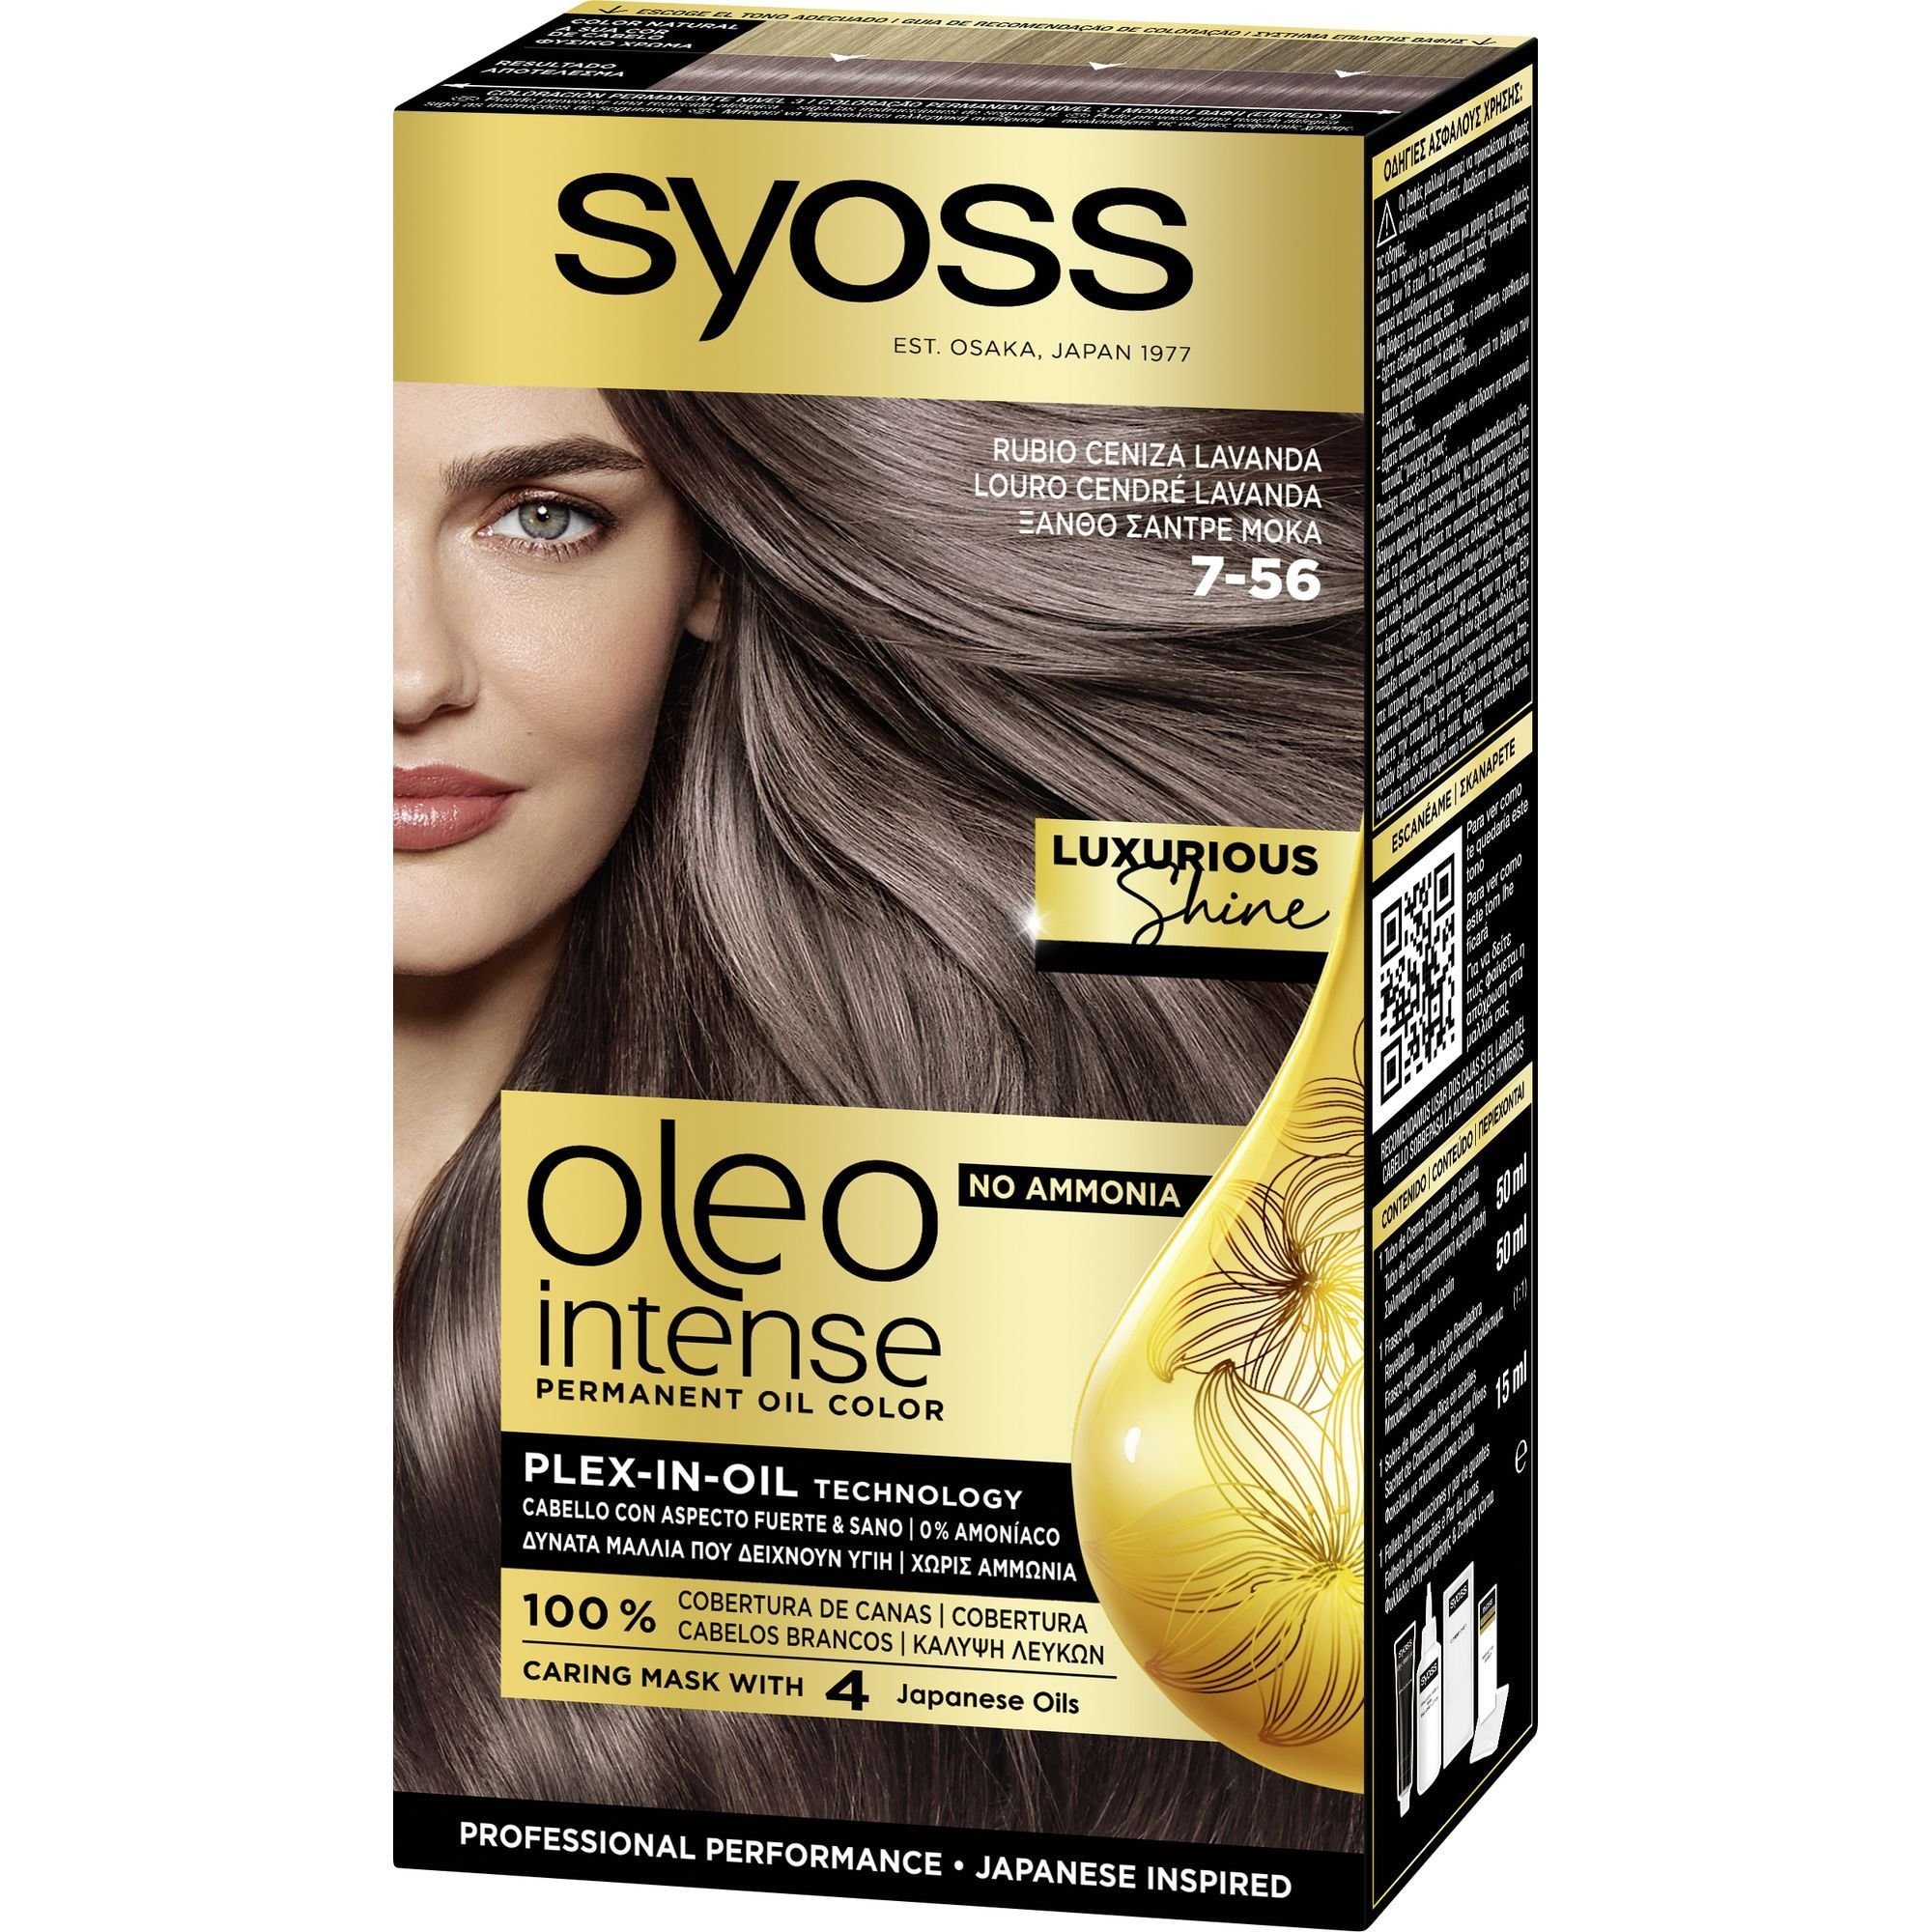 Syoss Syoss Oleo Intense Permanent Oil Hair Color Kit Επαγγελματική Μόνιμη Βαφή Μαλλιών για Εξαιρετική Κάλυψη & Έντονο Χρώμα που Διαρκεί, Χωρίς Αμμωνία 1 Τεμάχιο - 7-56 Ξανθό Σαντρέ Μόκα